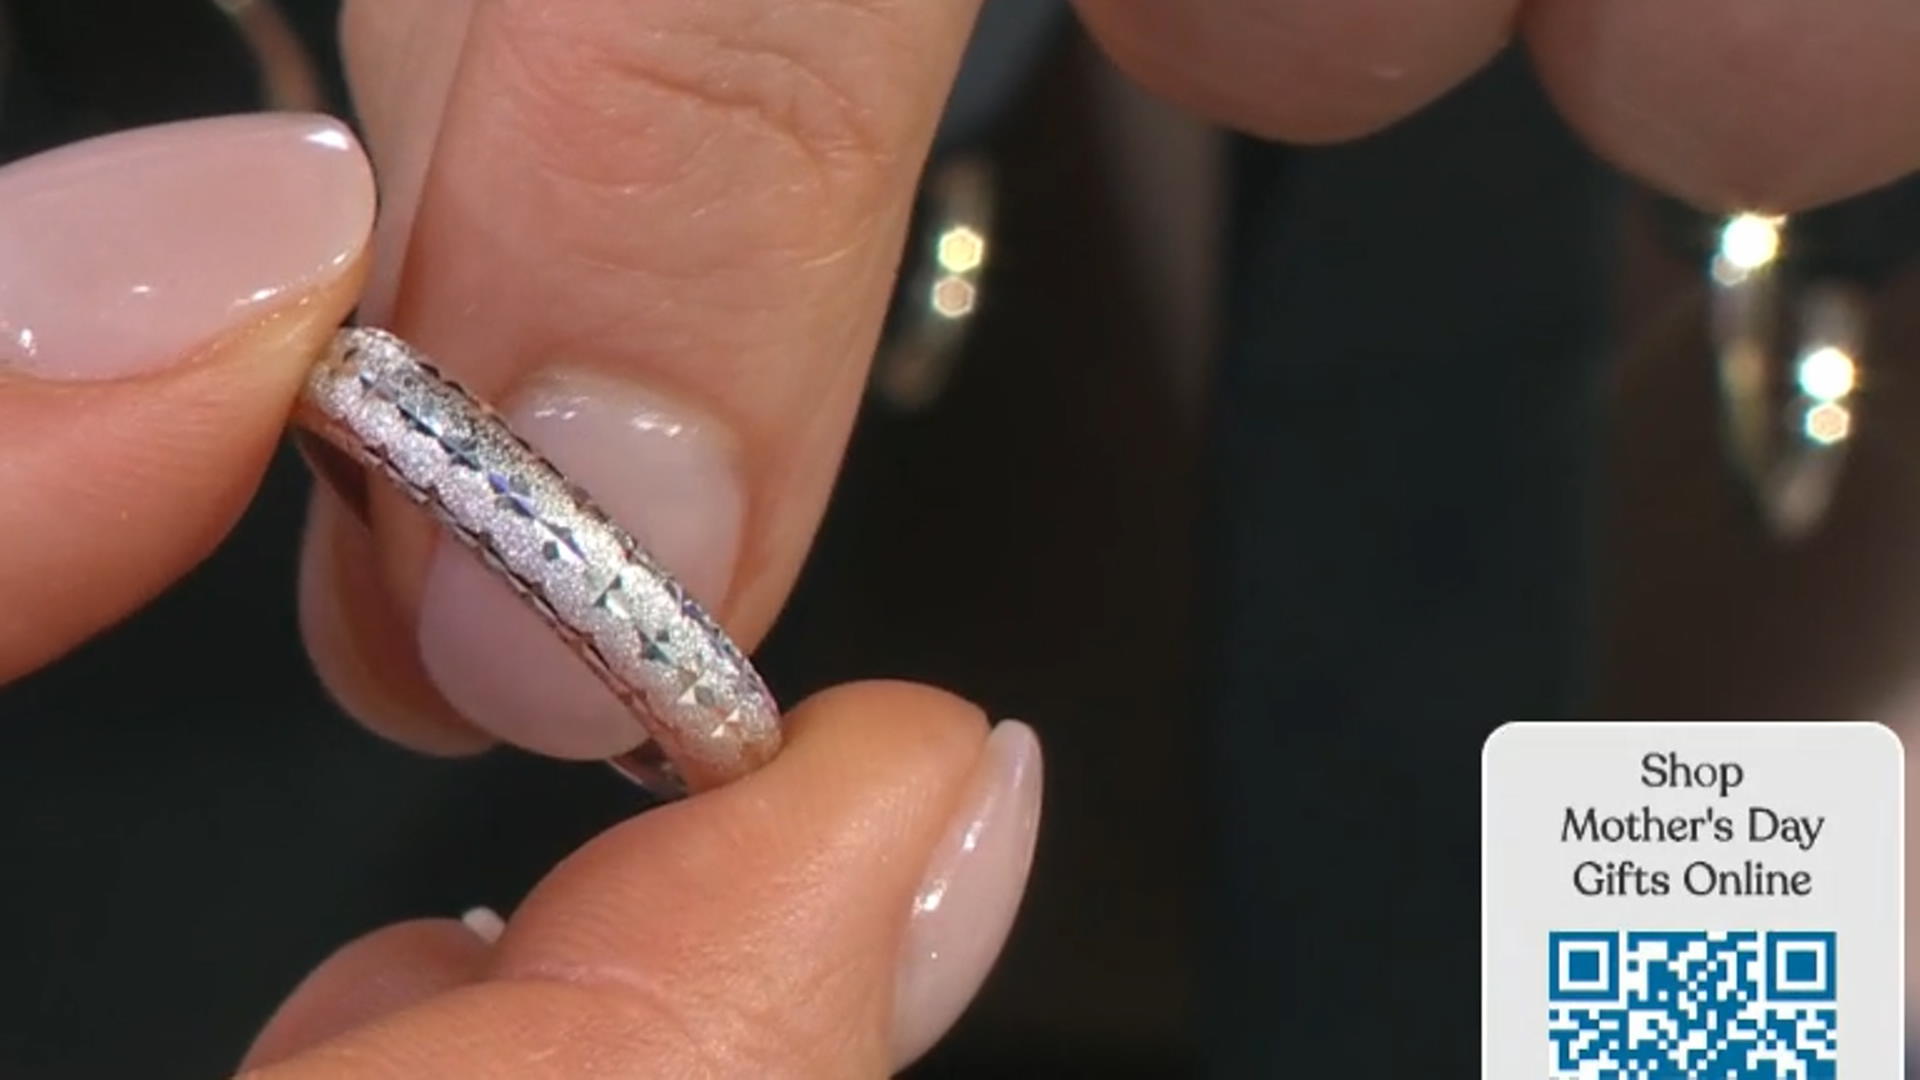 Rhodium Over 10k White Gold Diamond Cut Band Ring Video Thumbnail